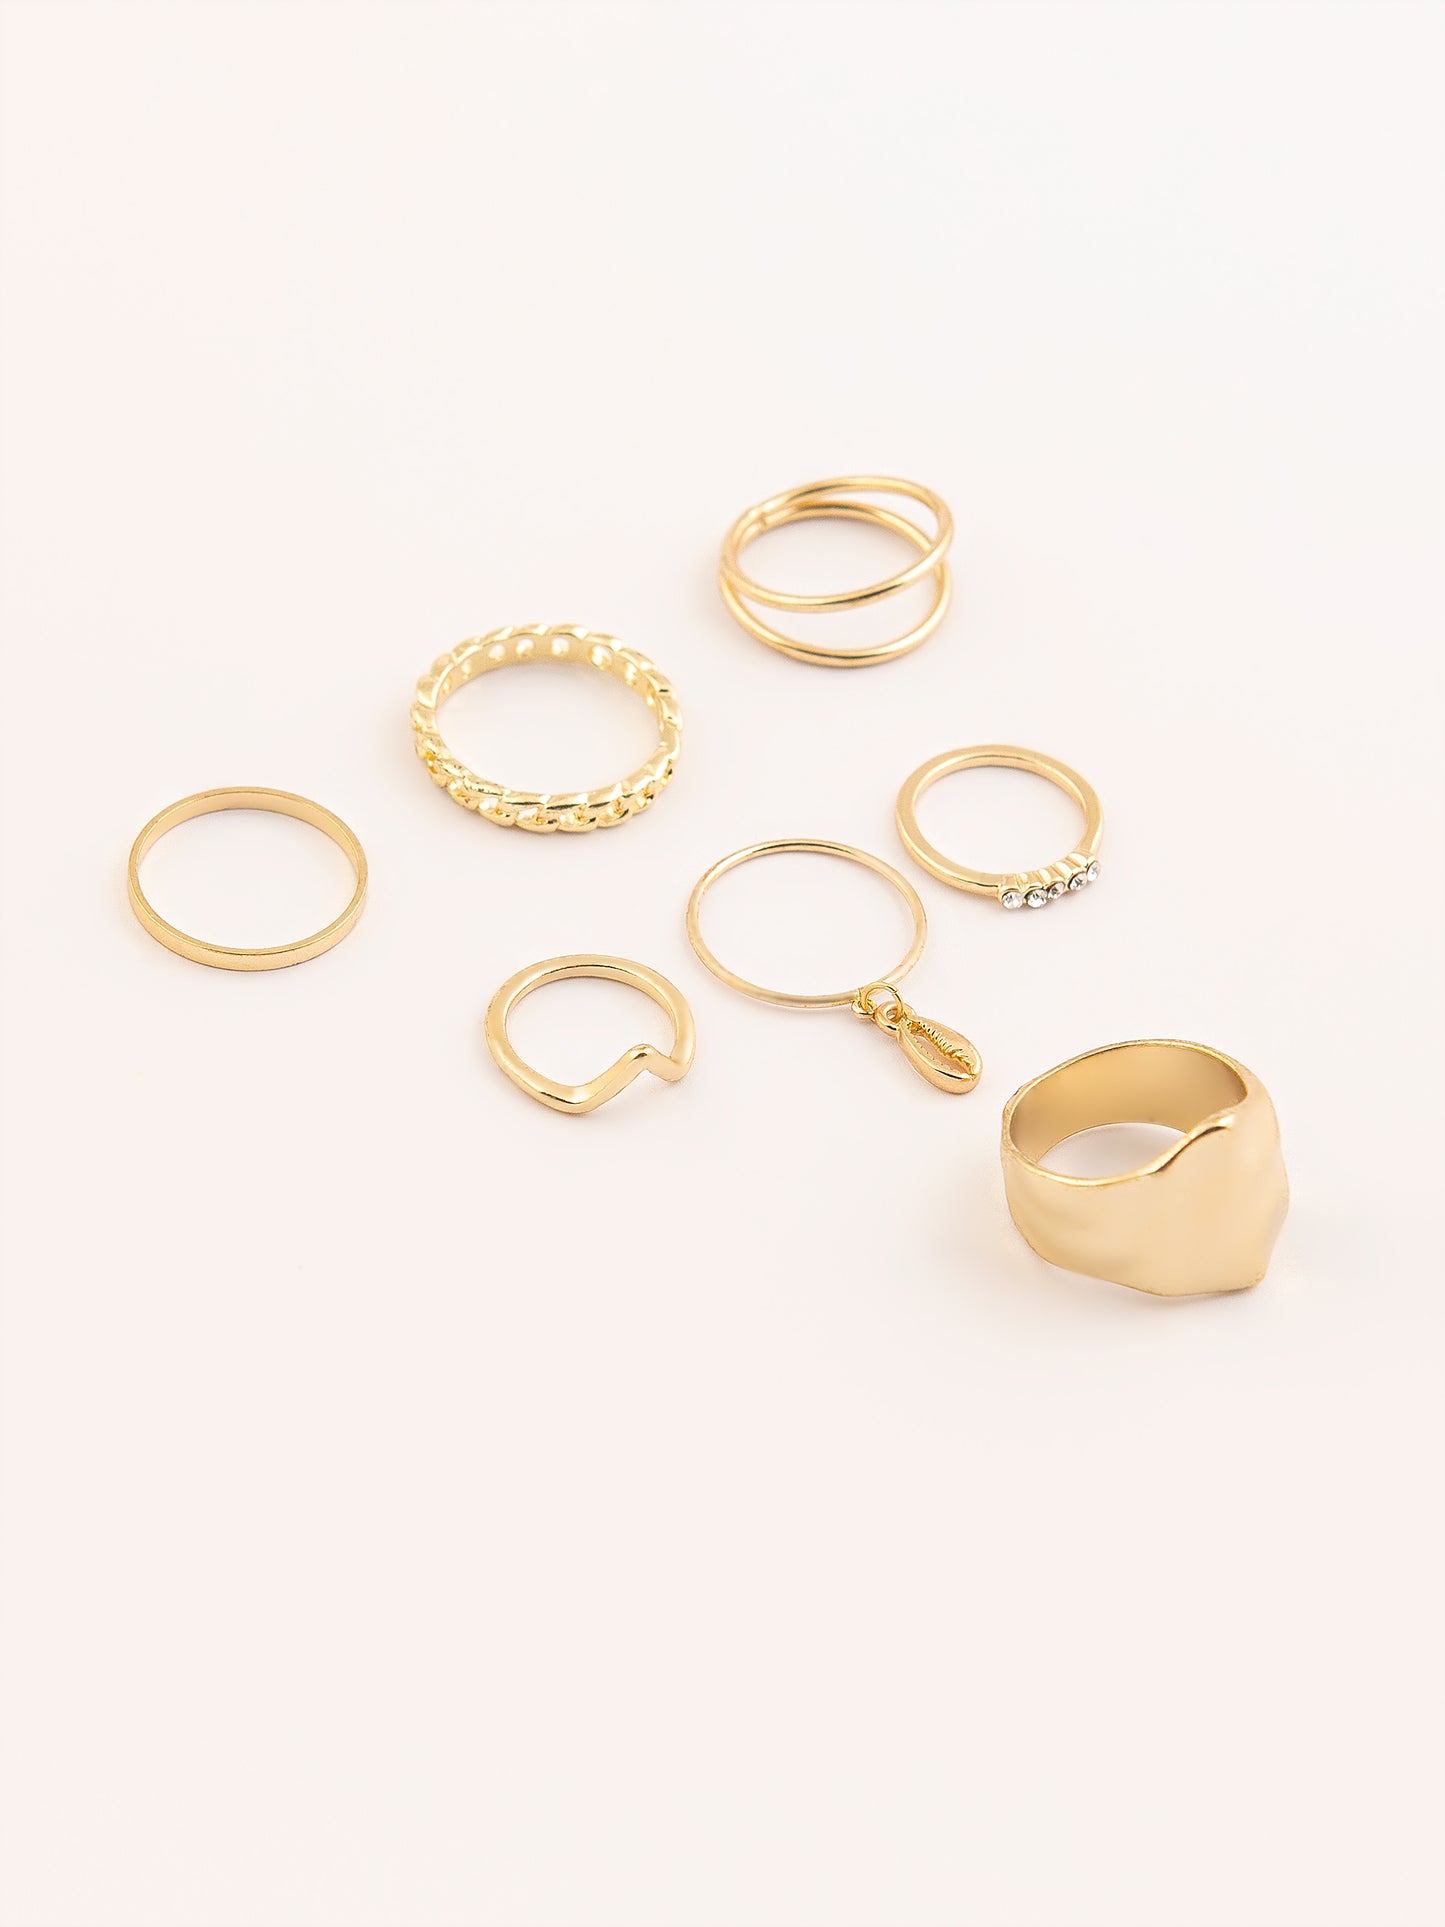 Vintage Gold Rings Set